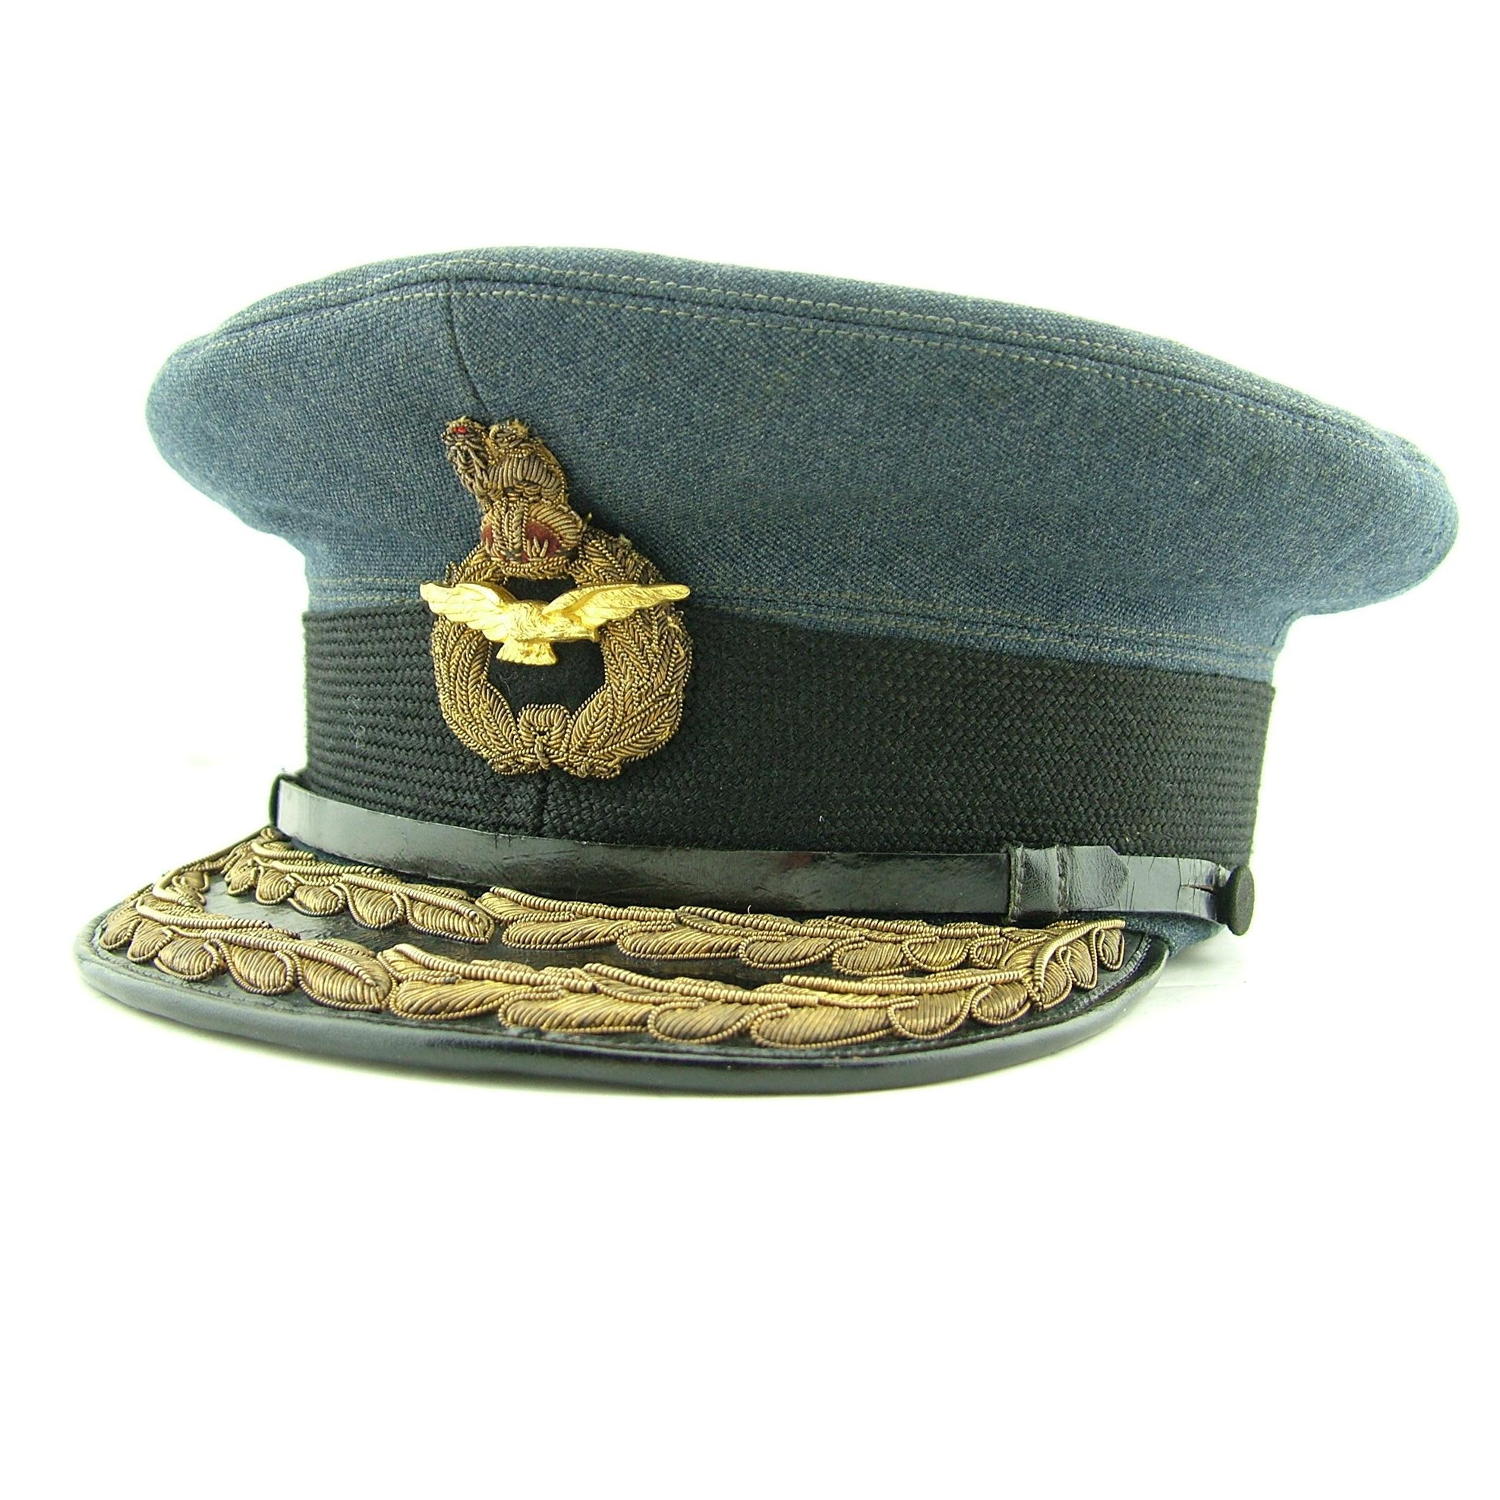 RAF 'Air Rank' service dress cap